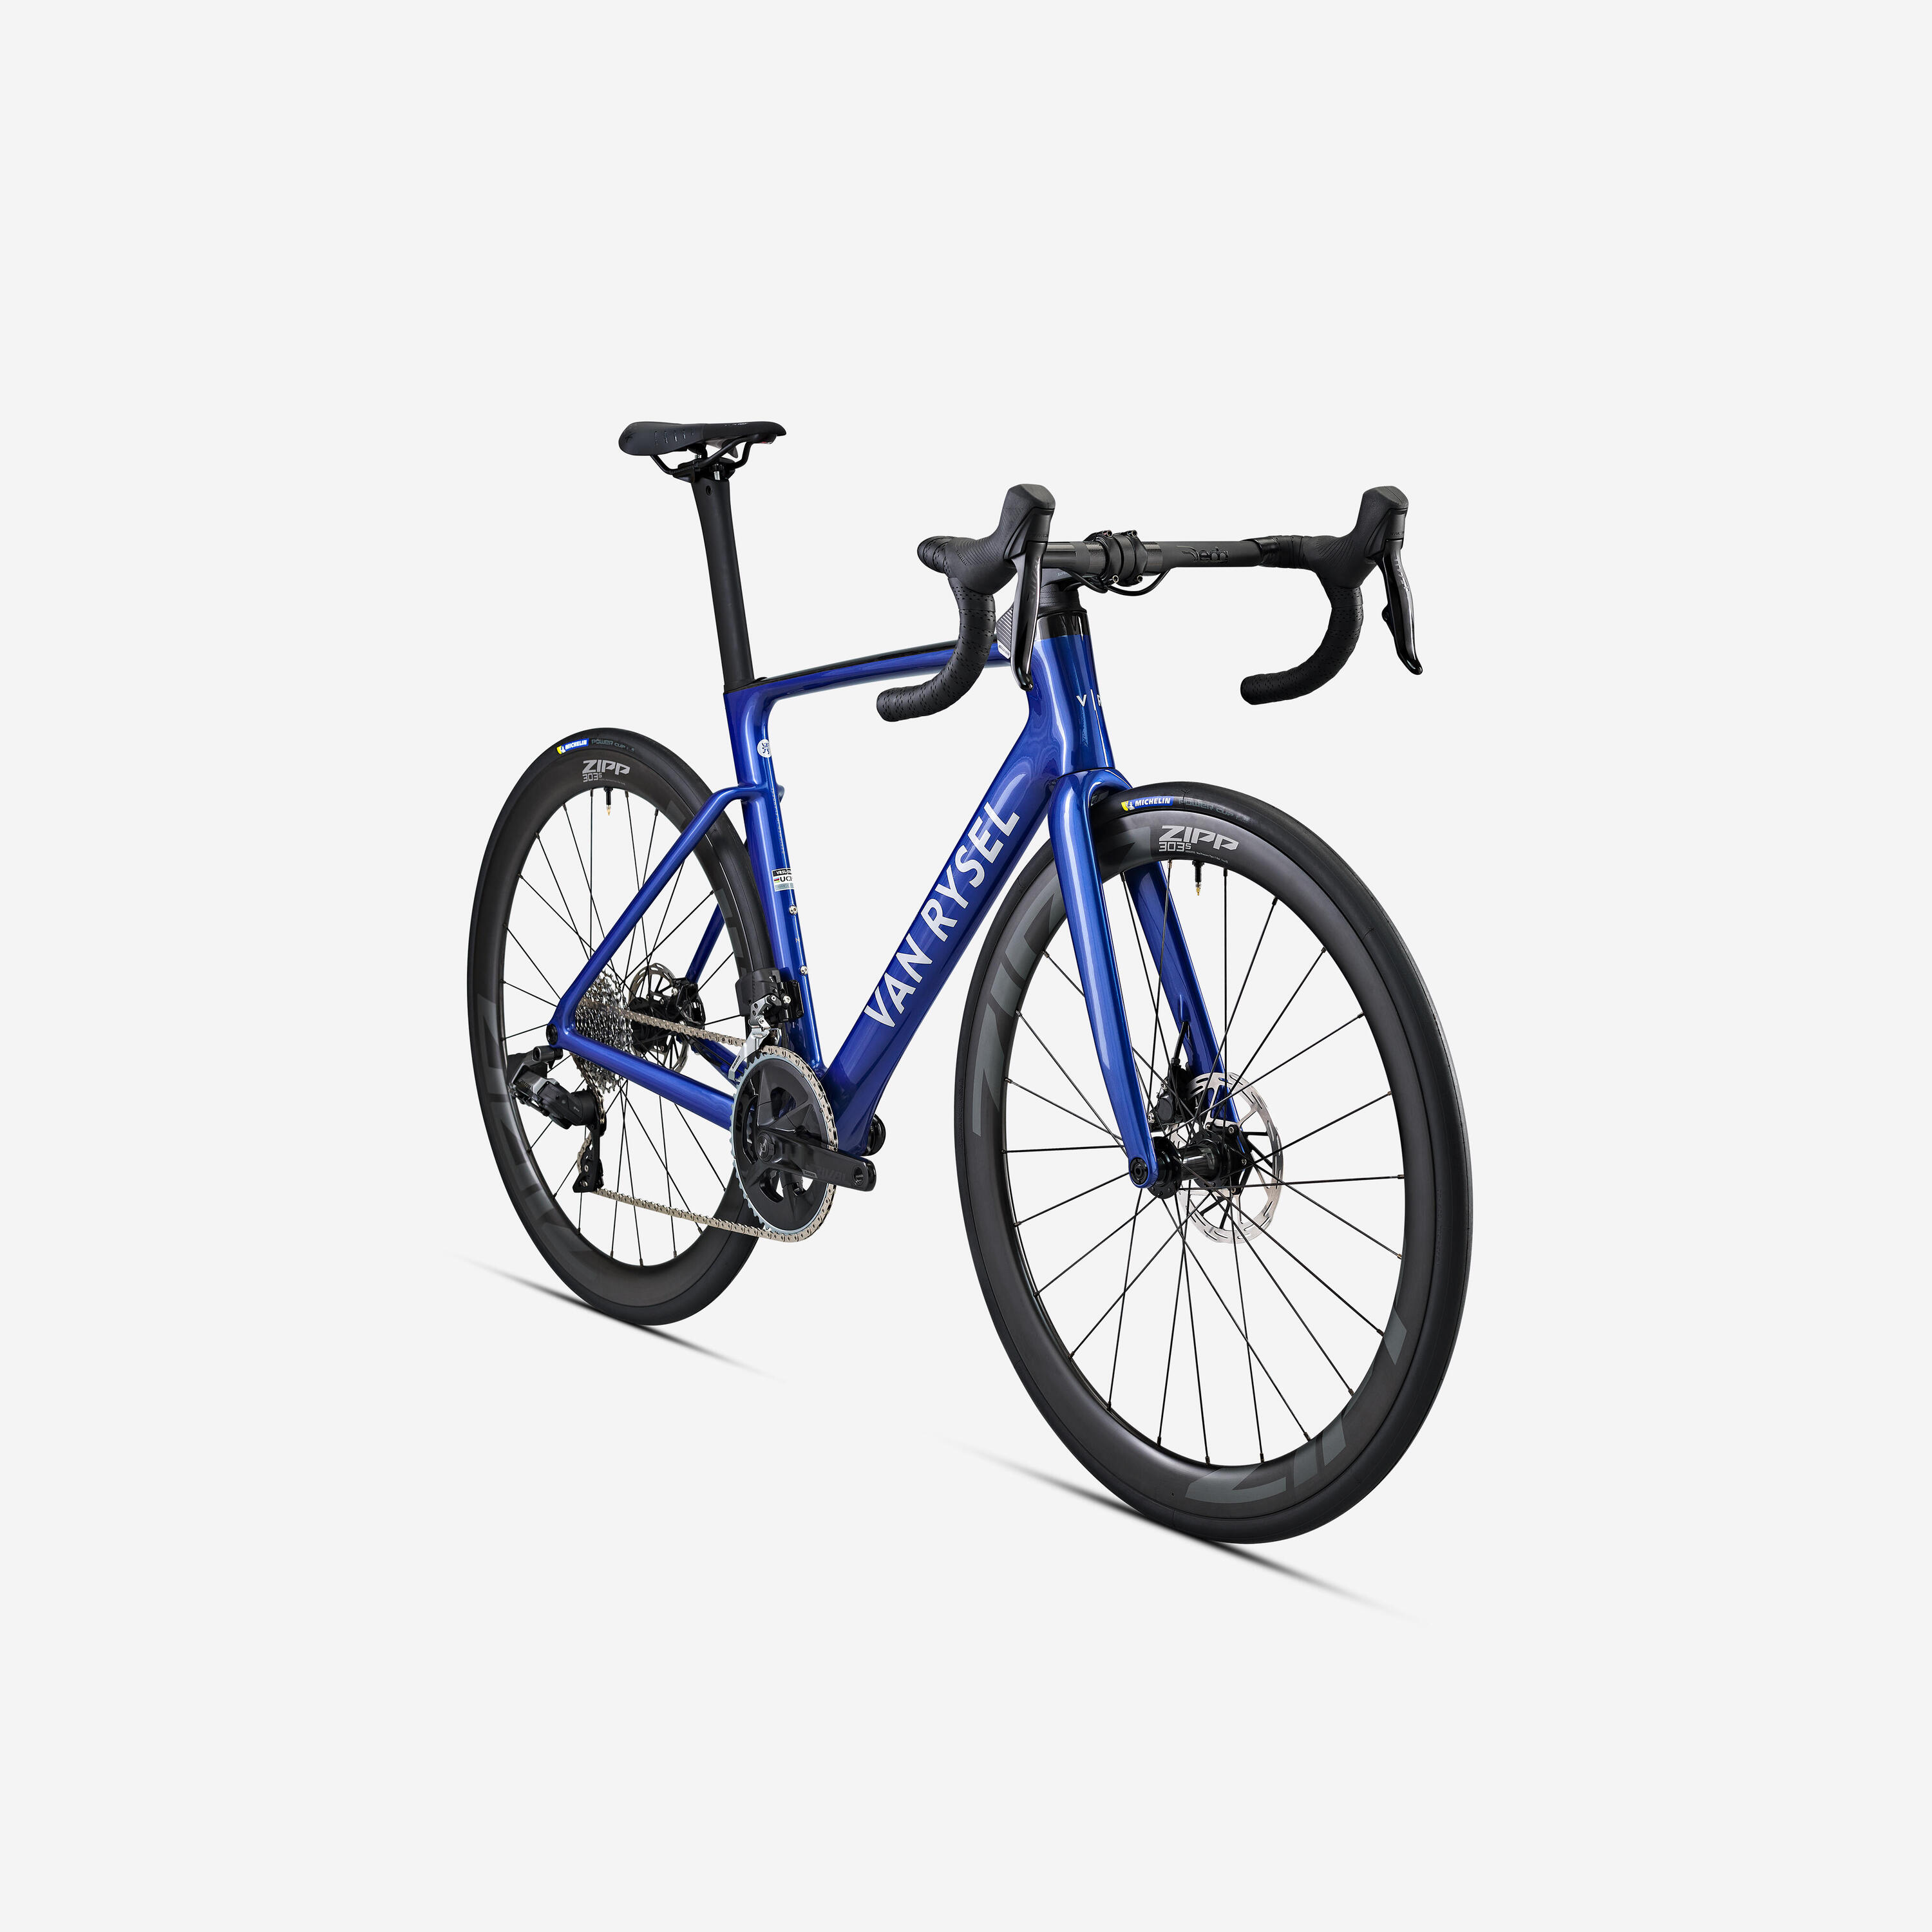 Road Bike RCR Rival AXS Power Sensor - Bright Indigo Blue 2/11